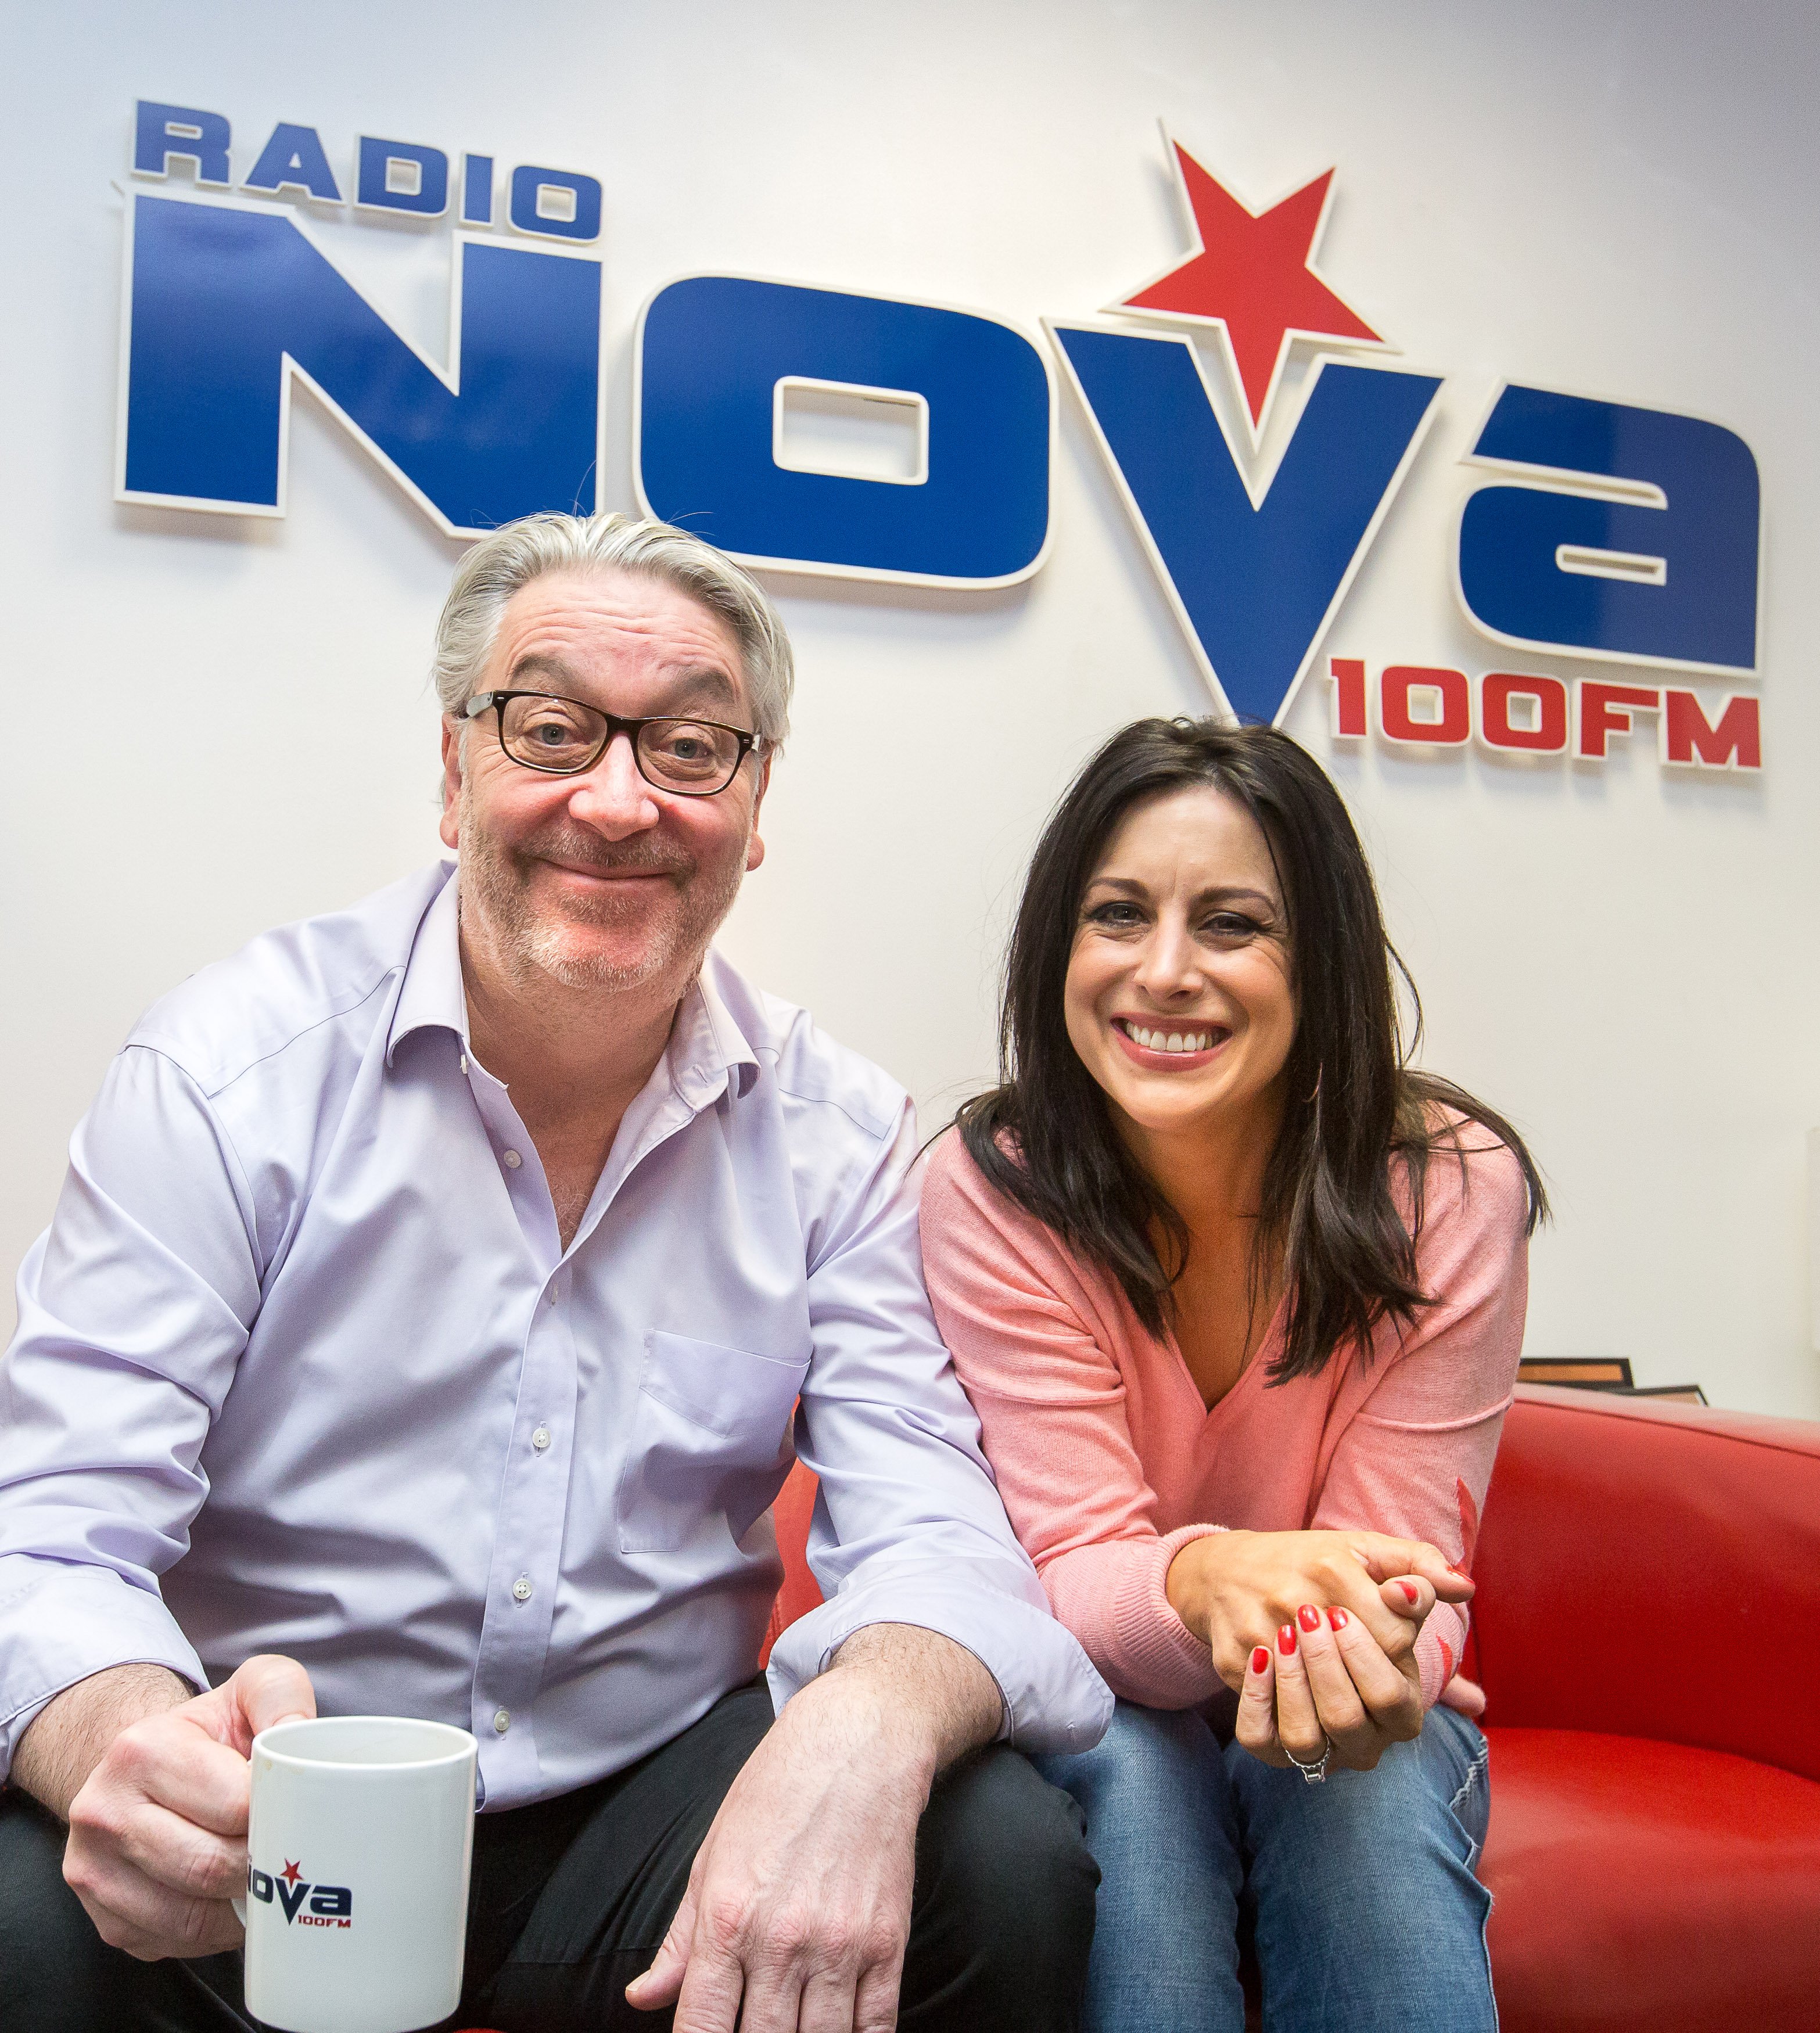 Radio Nova 100 on Twitter: "Great news! @ColmHayesRadio &amp; @KennedyLucy  Reunite for a new Breakfast Show on NOVA! #newshow #breakfastshow  #colmandlucy #radionova100 https://t.co/5CsqtufBBp" / Twitter